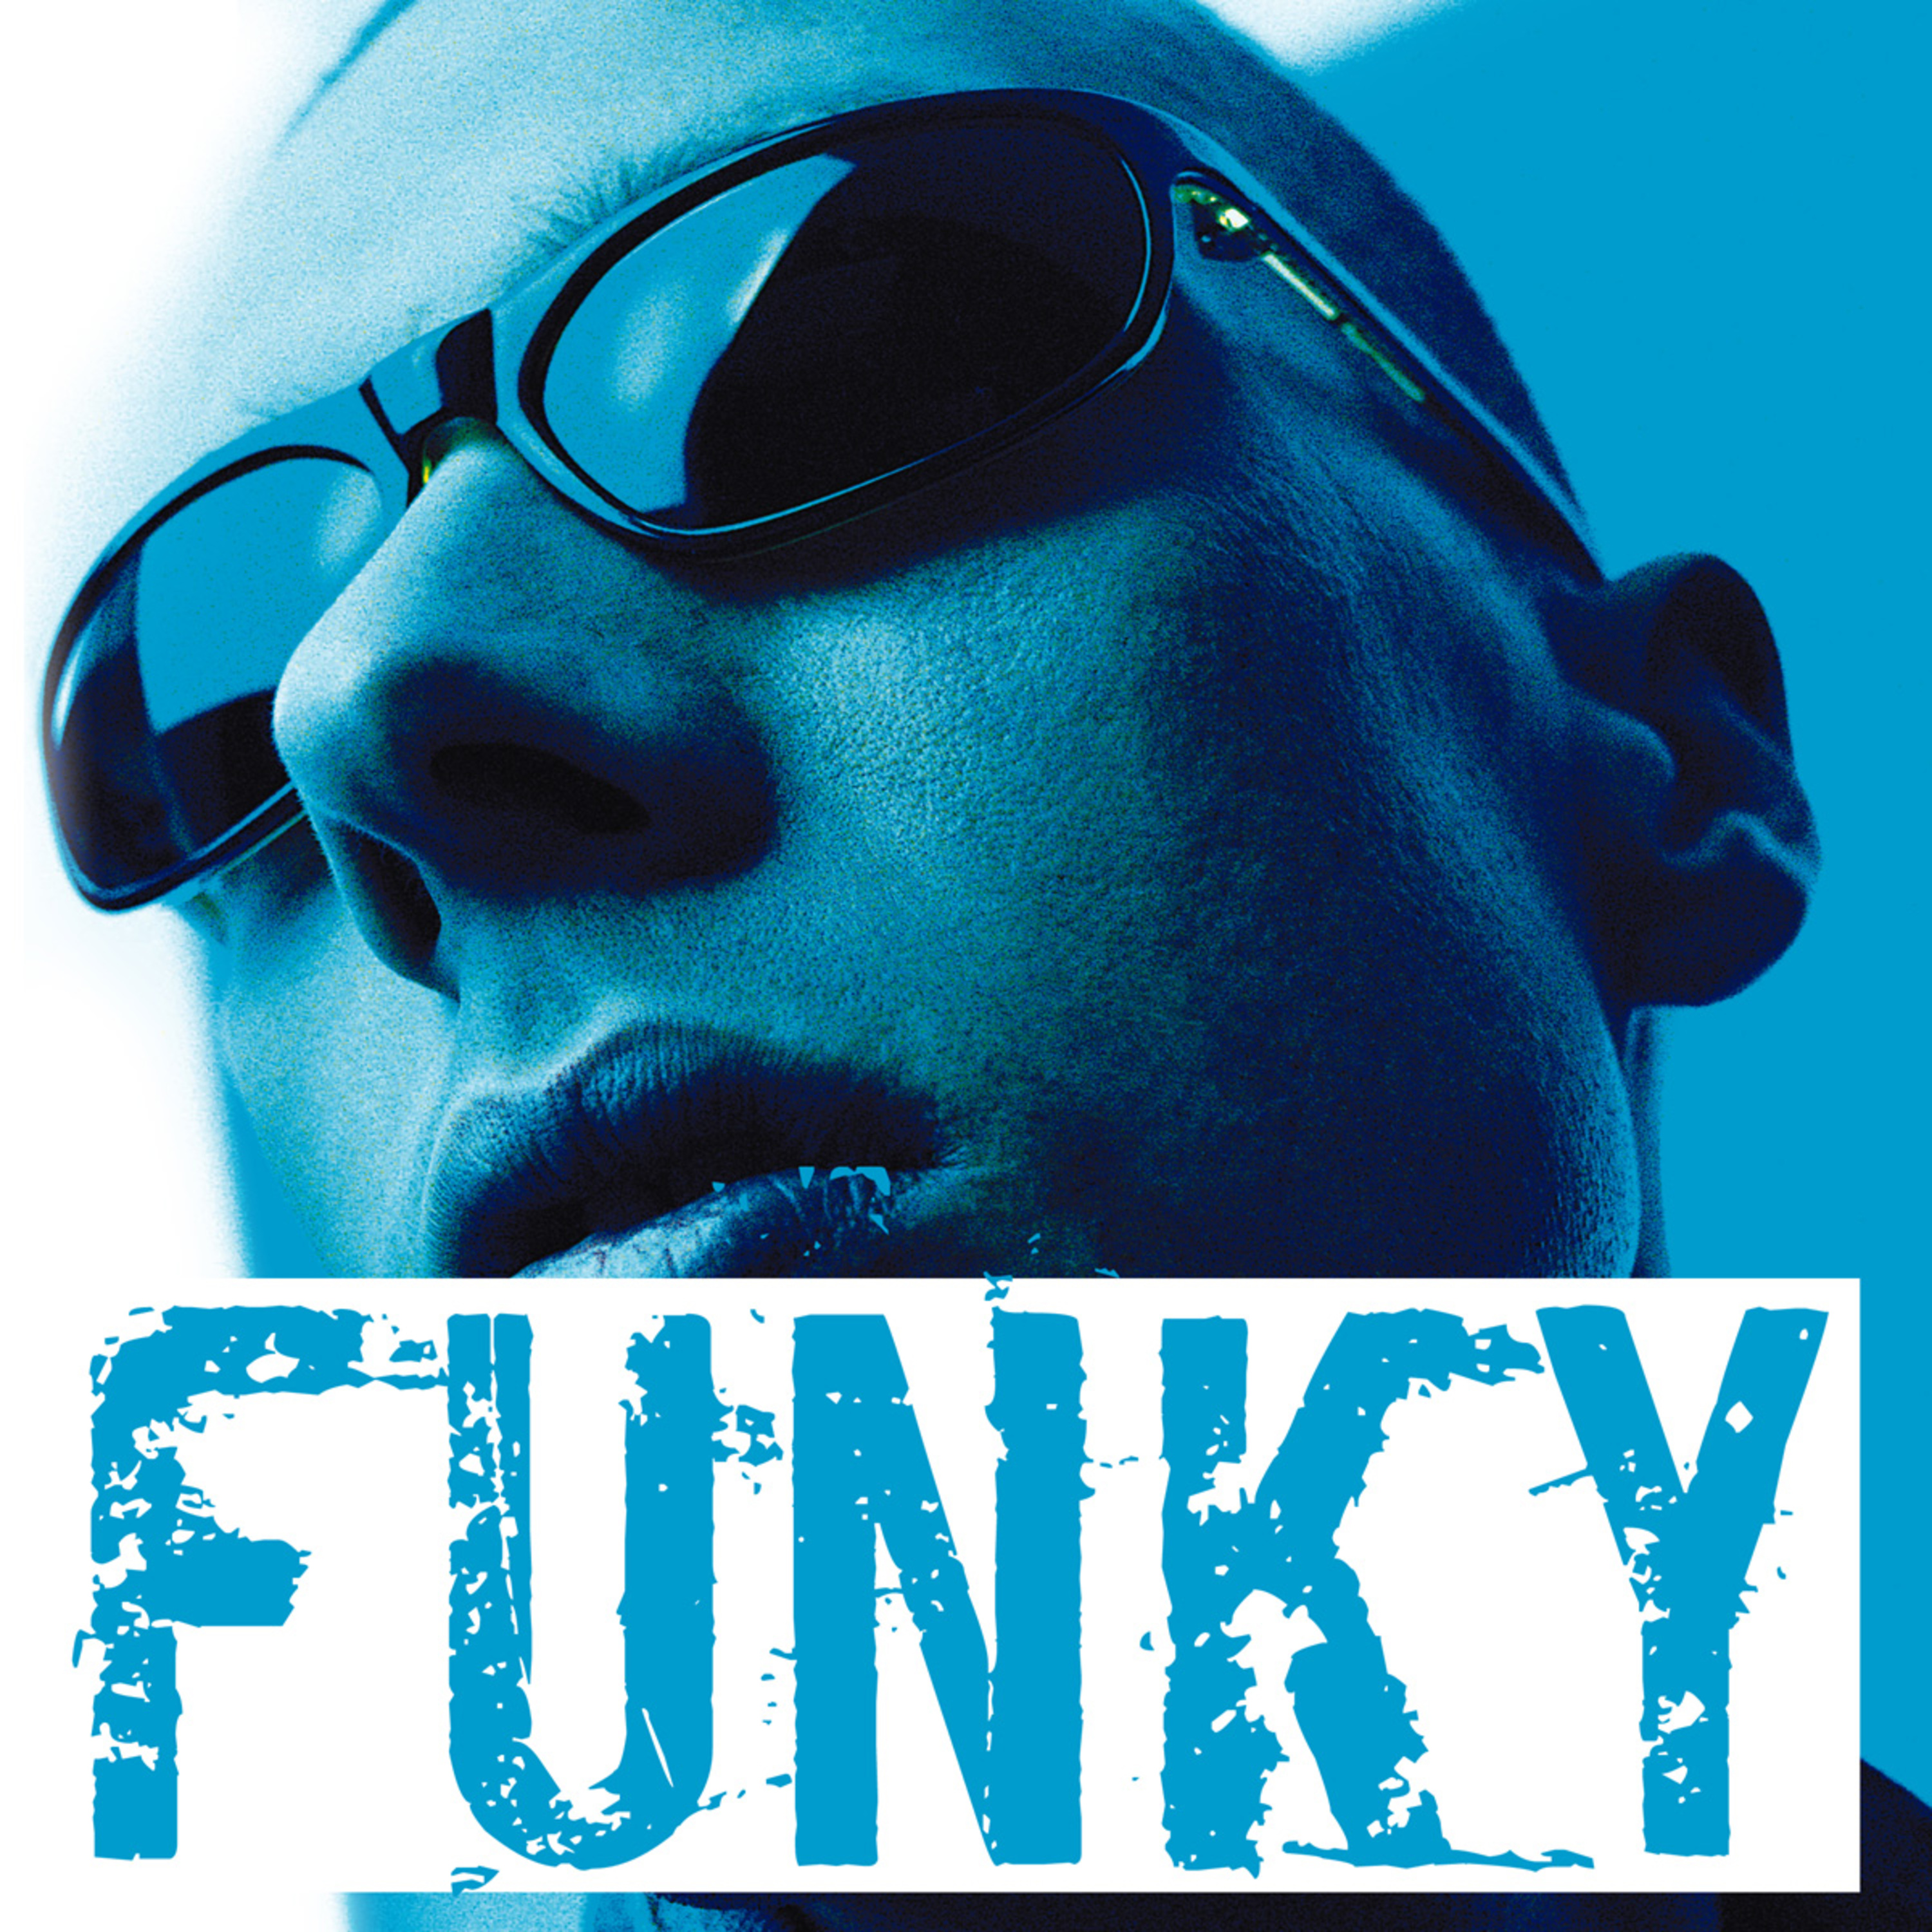 Funky (Original Mix)